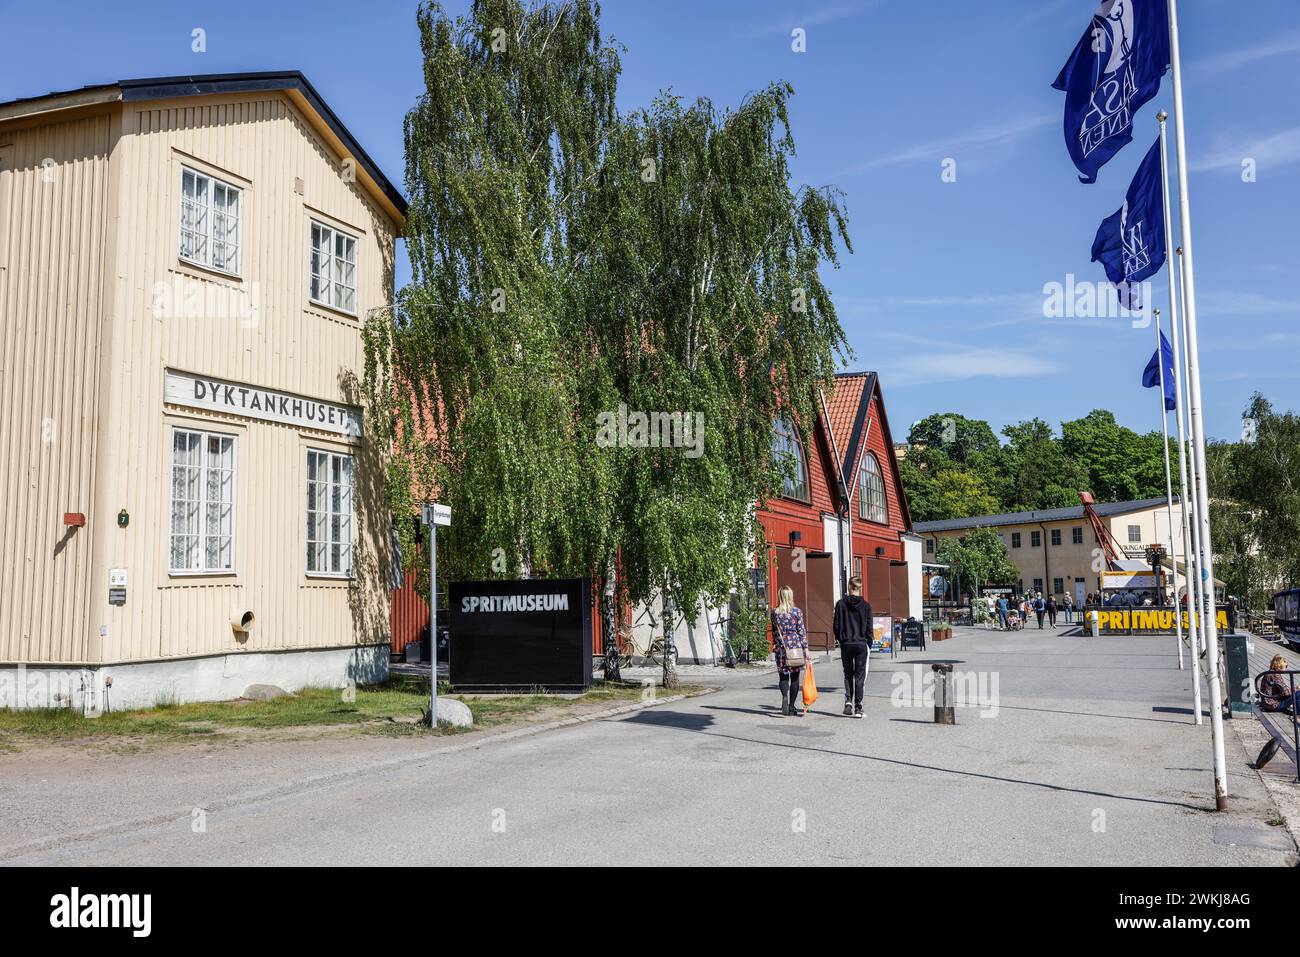 Lo Spiritmuseum (Spirit Museum) ospita la Collezione d'arte Absolut in ex cantieri navali della marina a Galärvarvet a Djurgården, Stoccolma Foto Stock